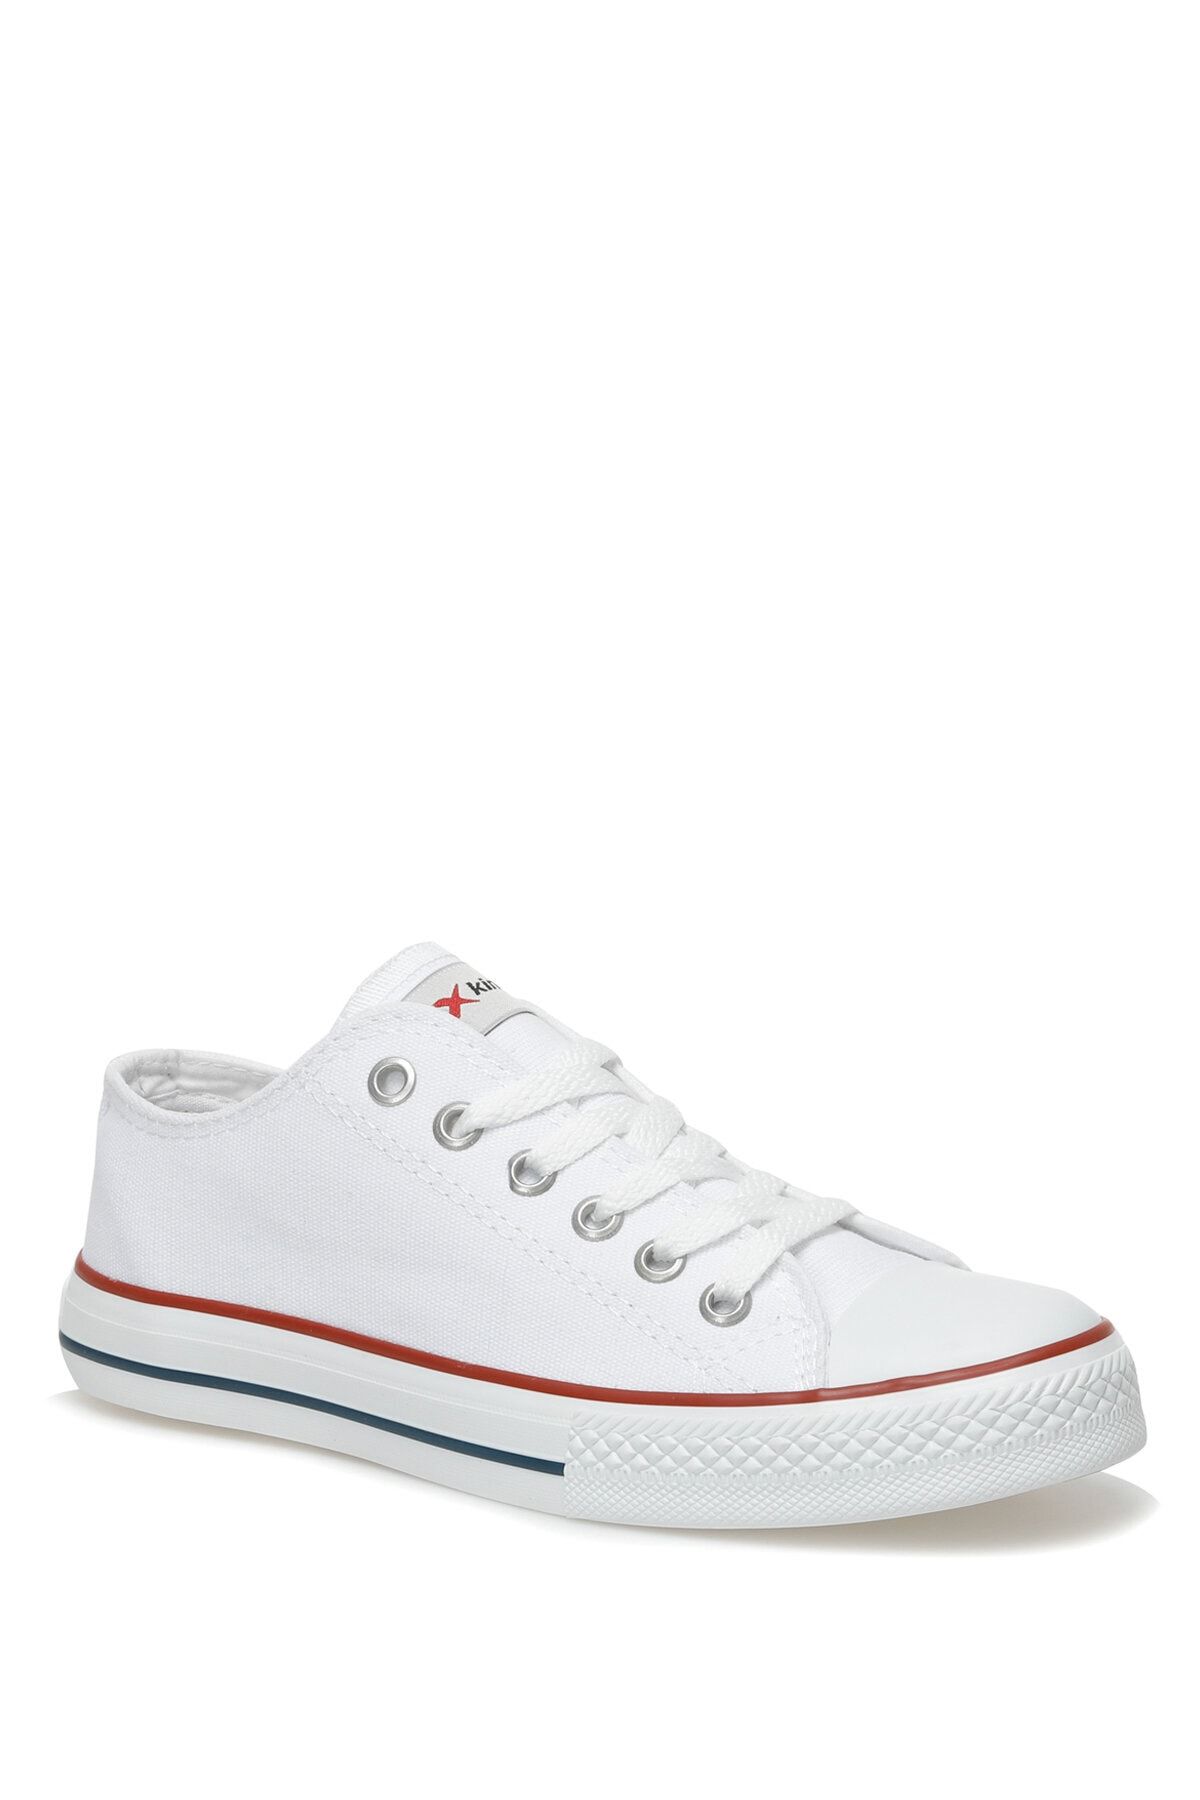 Kinetix Fowler Tx 3fx Beyaz Sneaker Ayakkabı